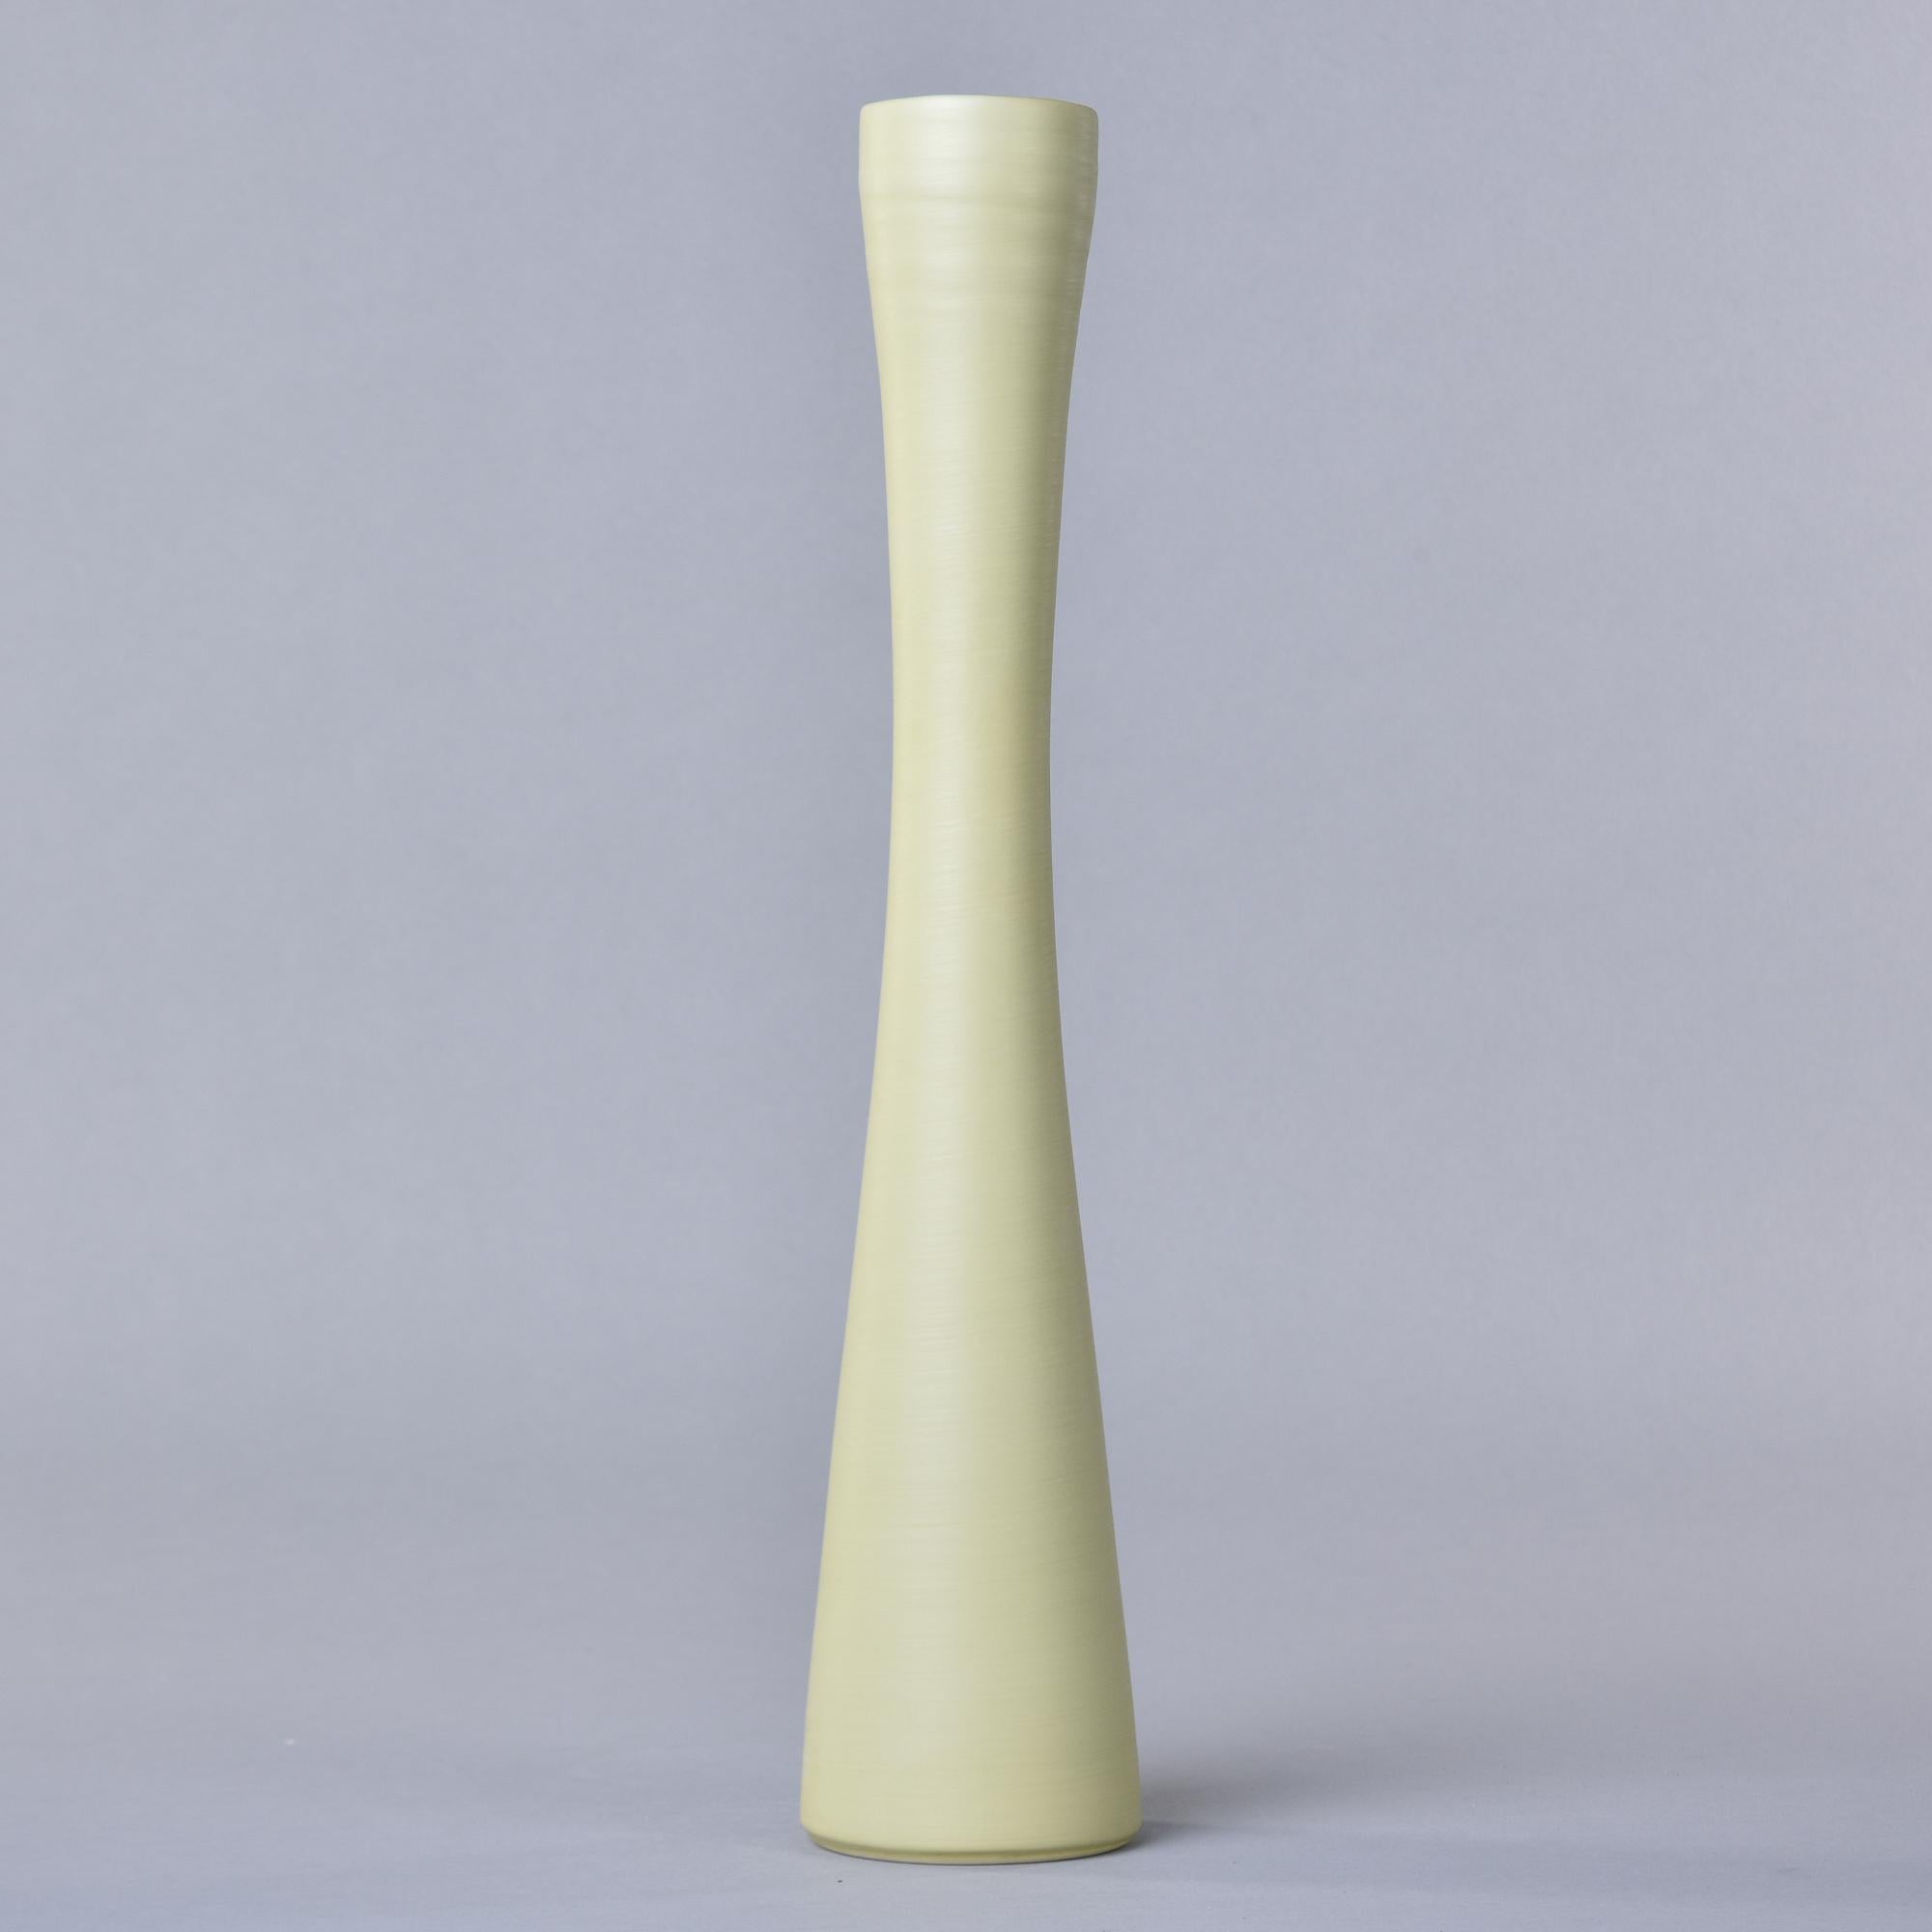 Mid-Century Modern New Rina Menardi Tall Ceramic Flute Vase in Light Pistachio For Sale